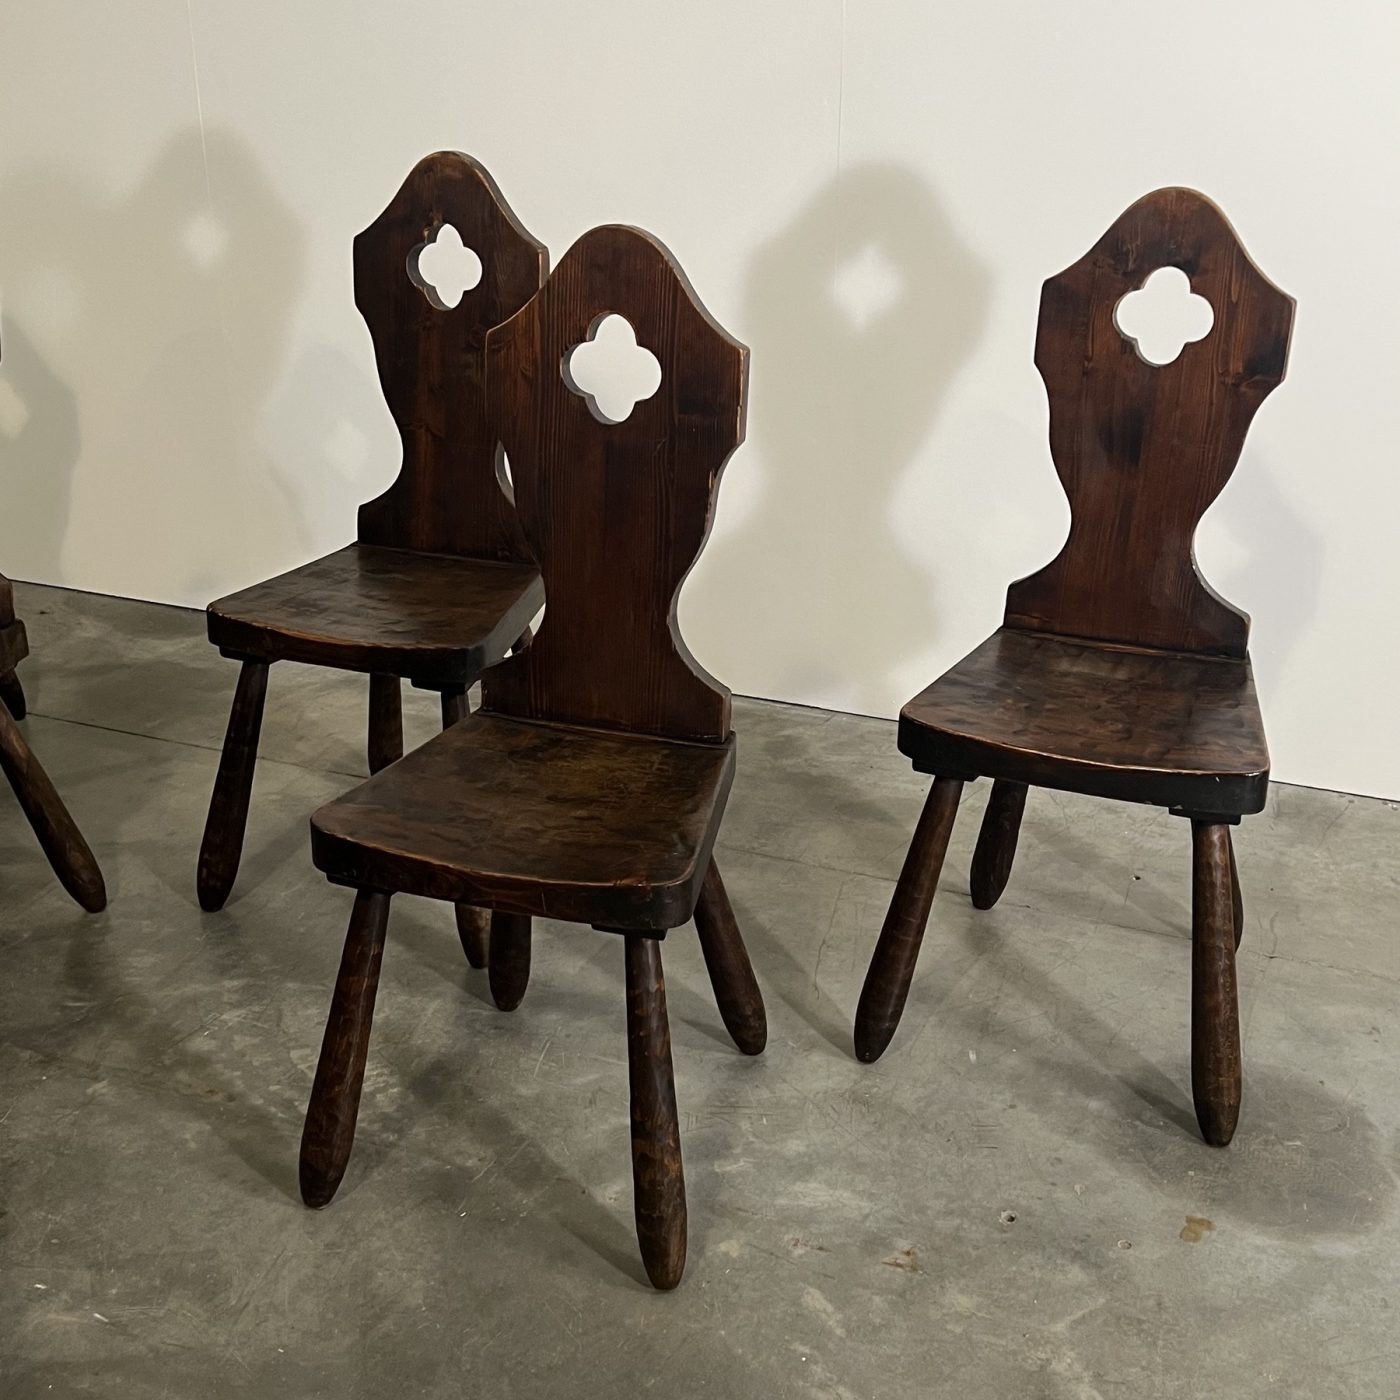 objet-vagabond-rustic-chairs0000